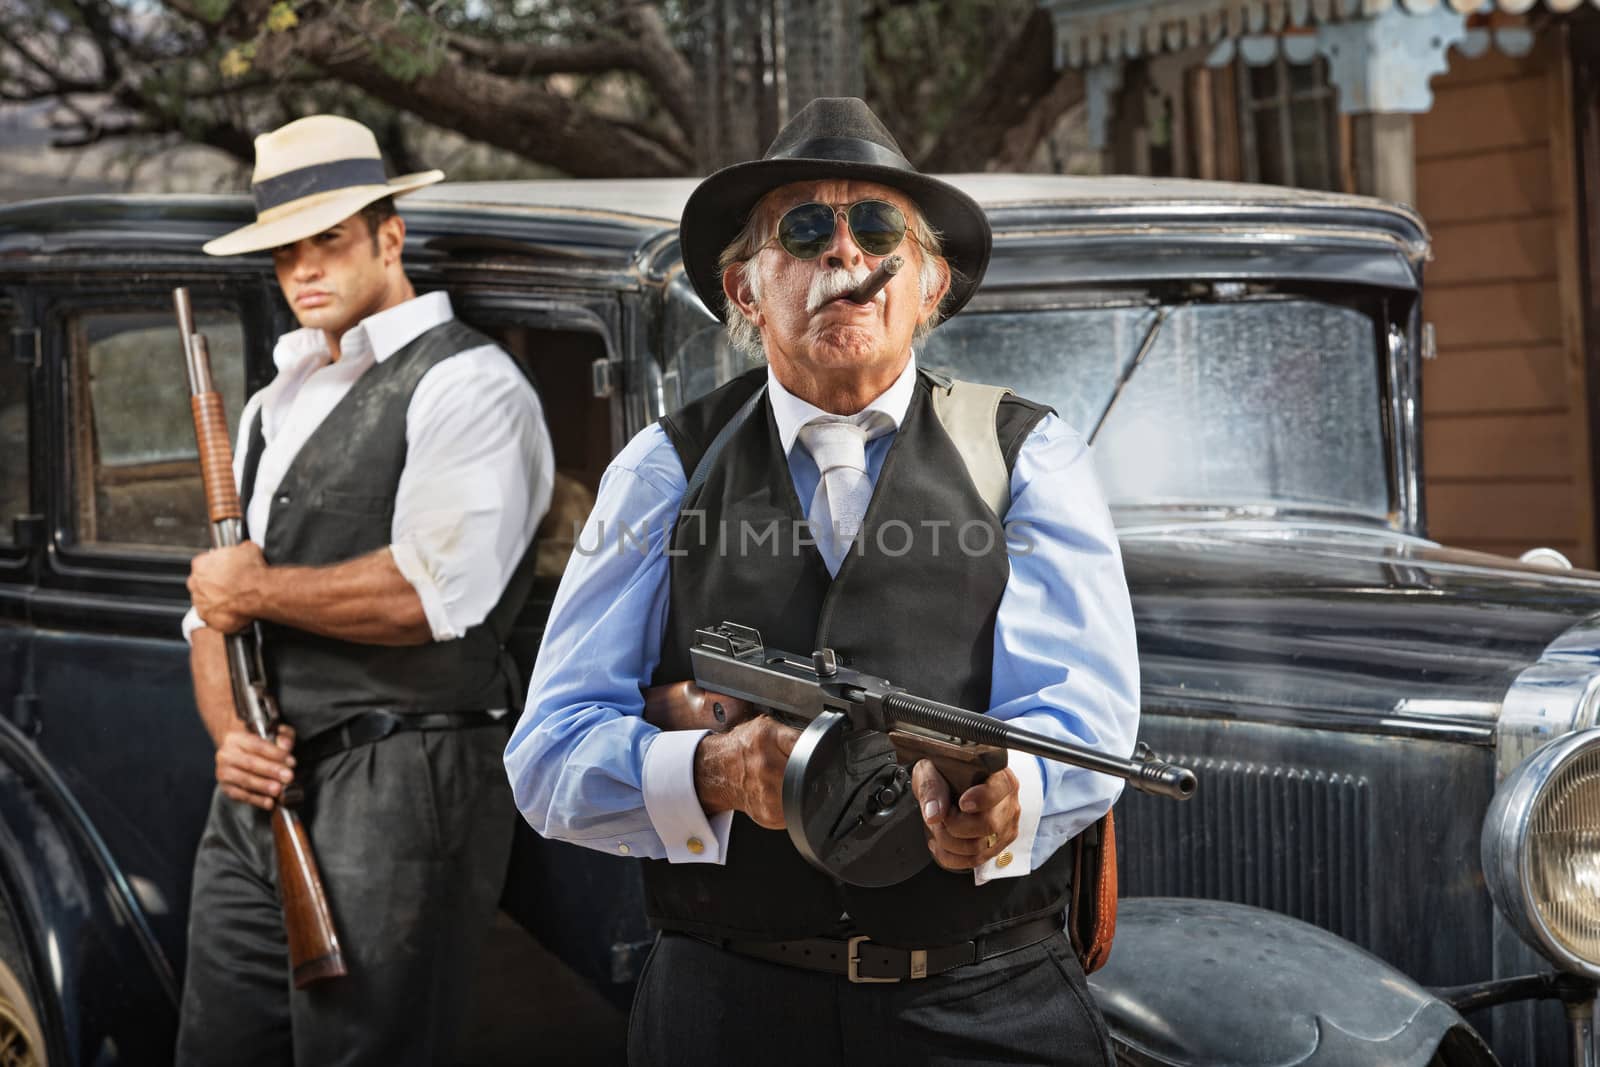 Serious mob boss with gun and guard near car